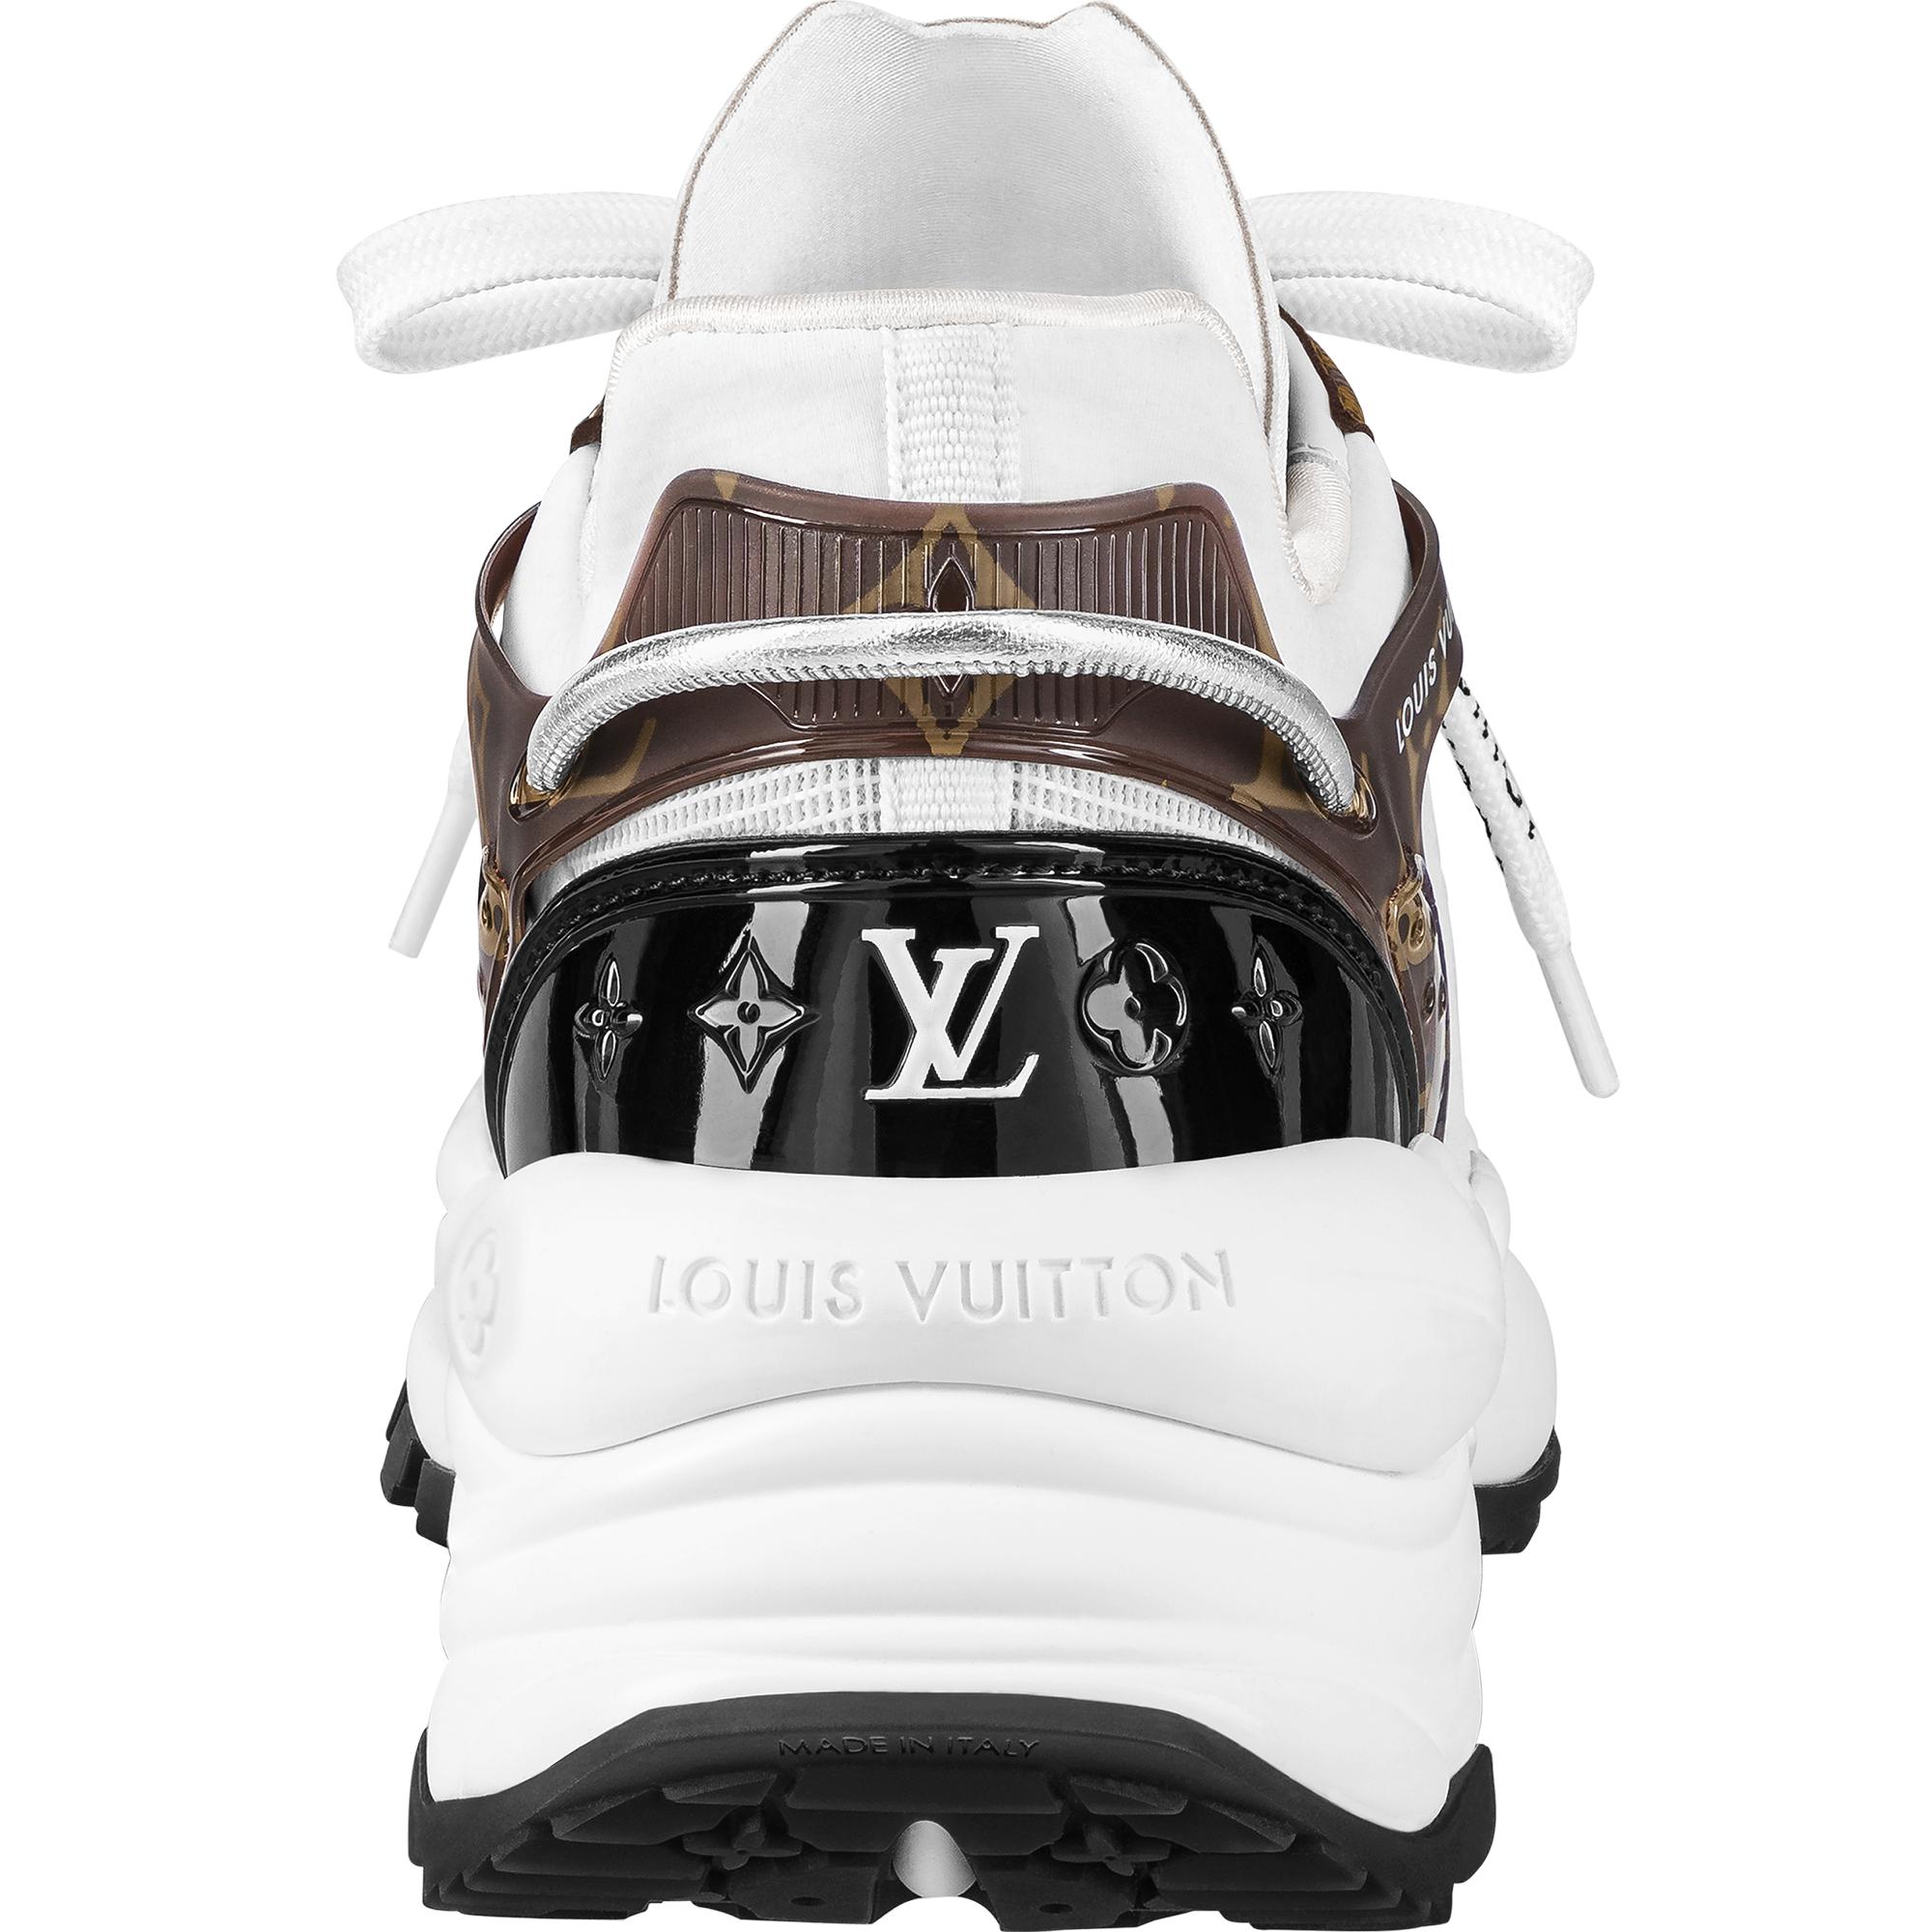 Louis Vuitton Run 55 Sneaker (1AA169)  Sneakers, Pink leather, Louis  vuitton